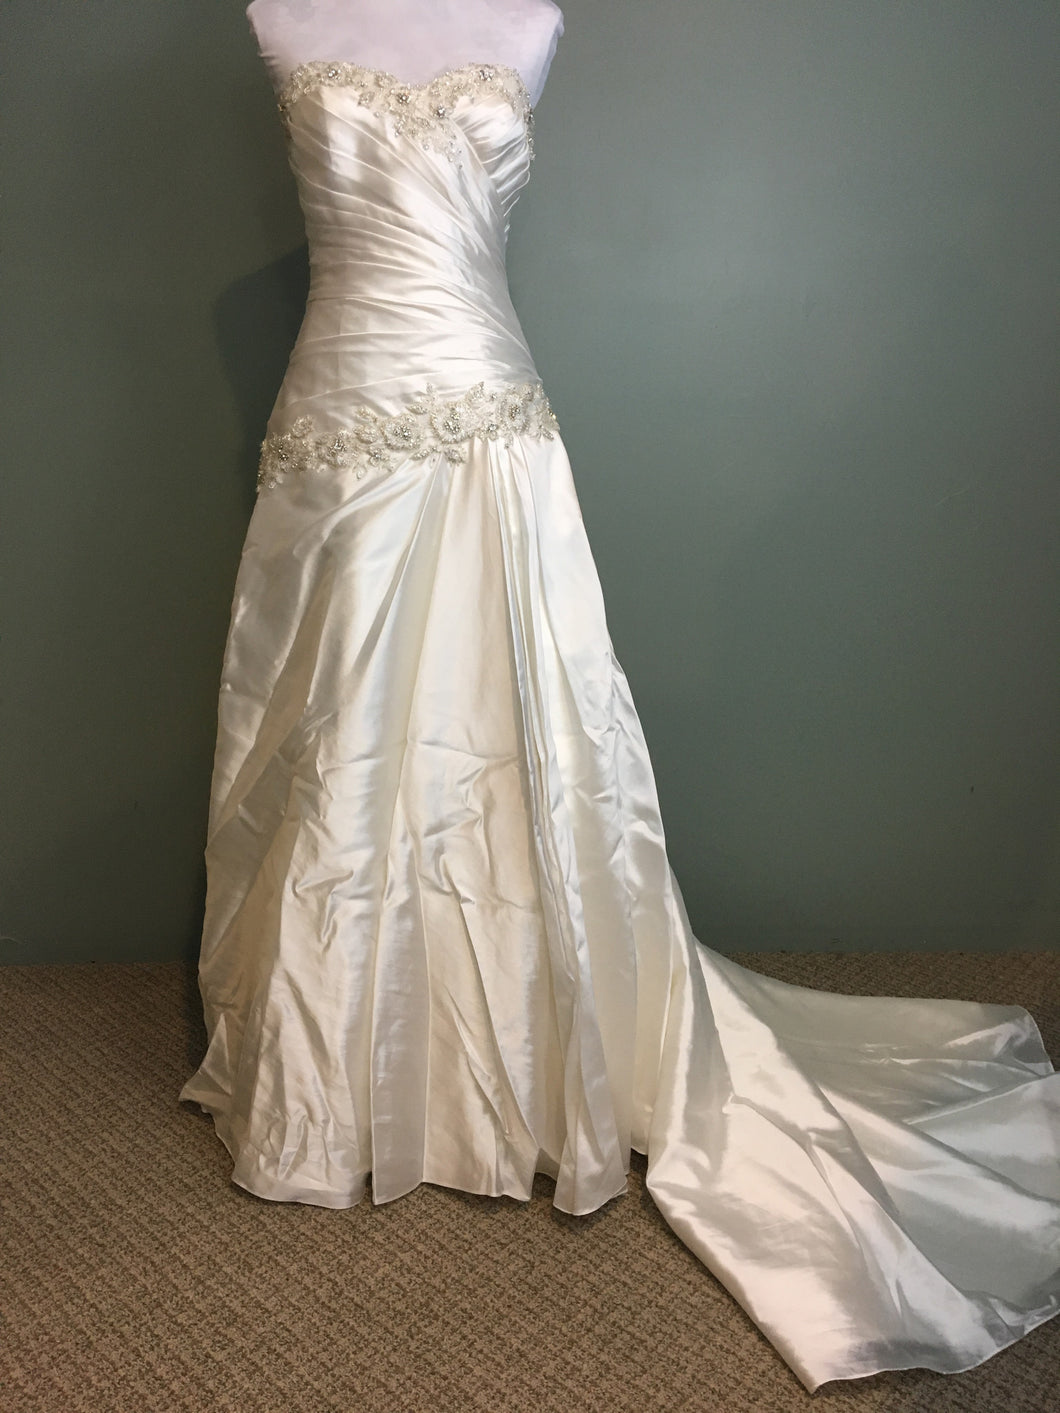 Pnina Tornai 'Perla D' size 2 used wedding dress front view on hanger